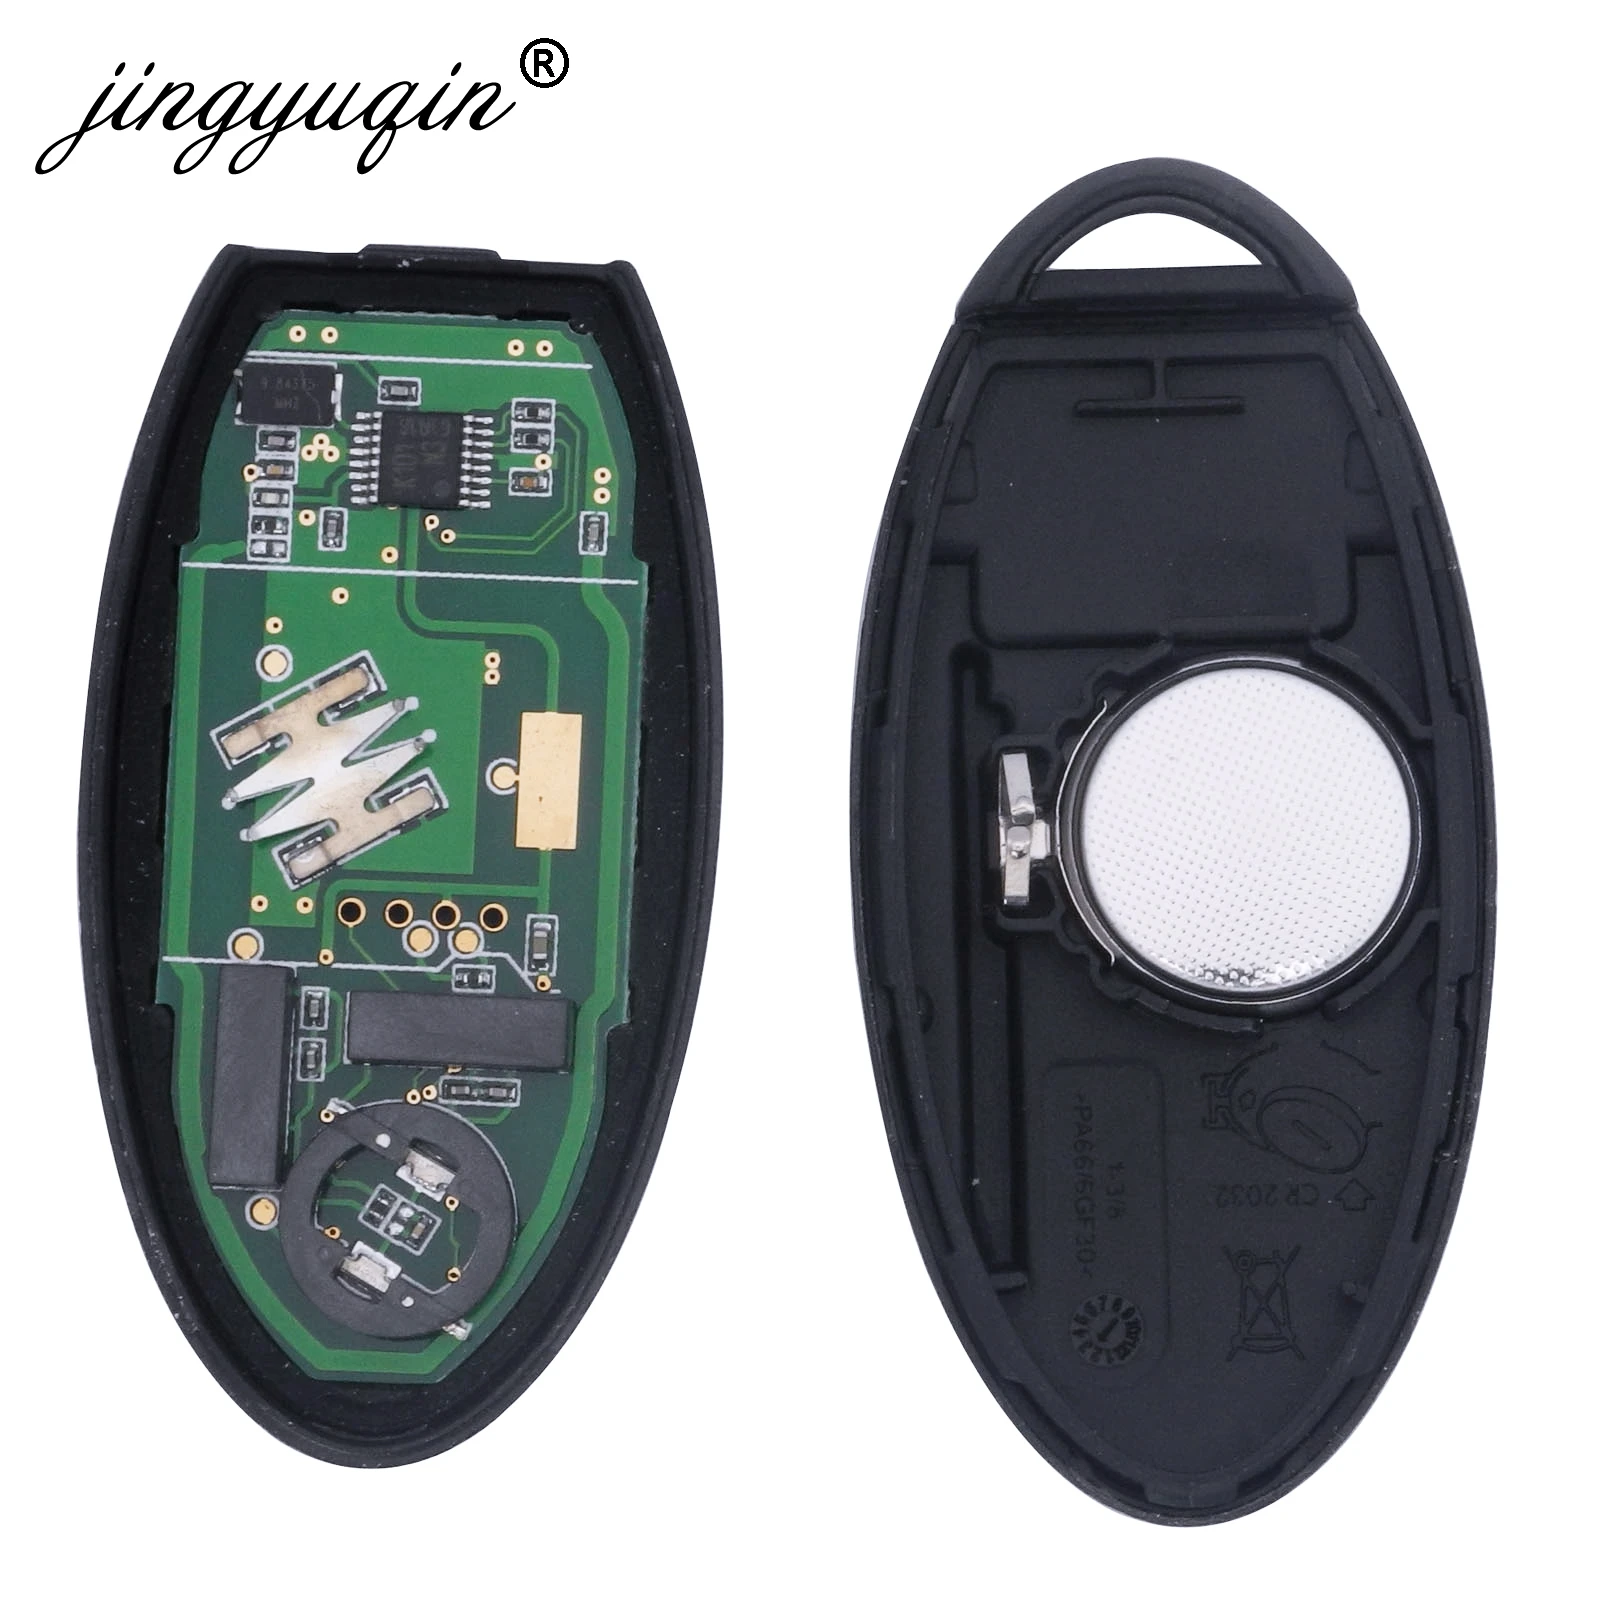 Jingyuqin 5 шт. умный дистанционный ключ для автомобиля 315 МГц ID46 чип для NISSAN March Sunny Tiida Livina Sylphy Altima Maxima 3 кнопки брелок